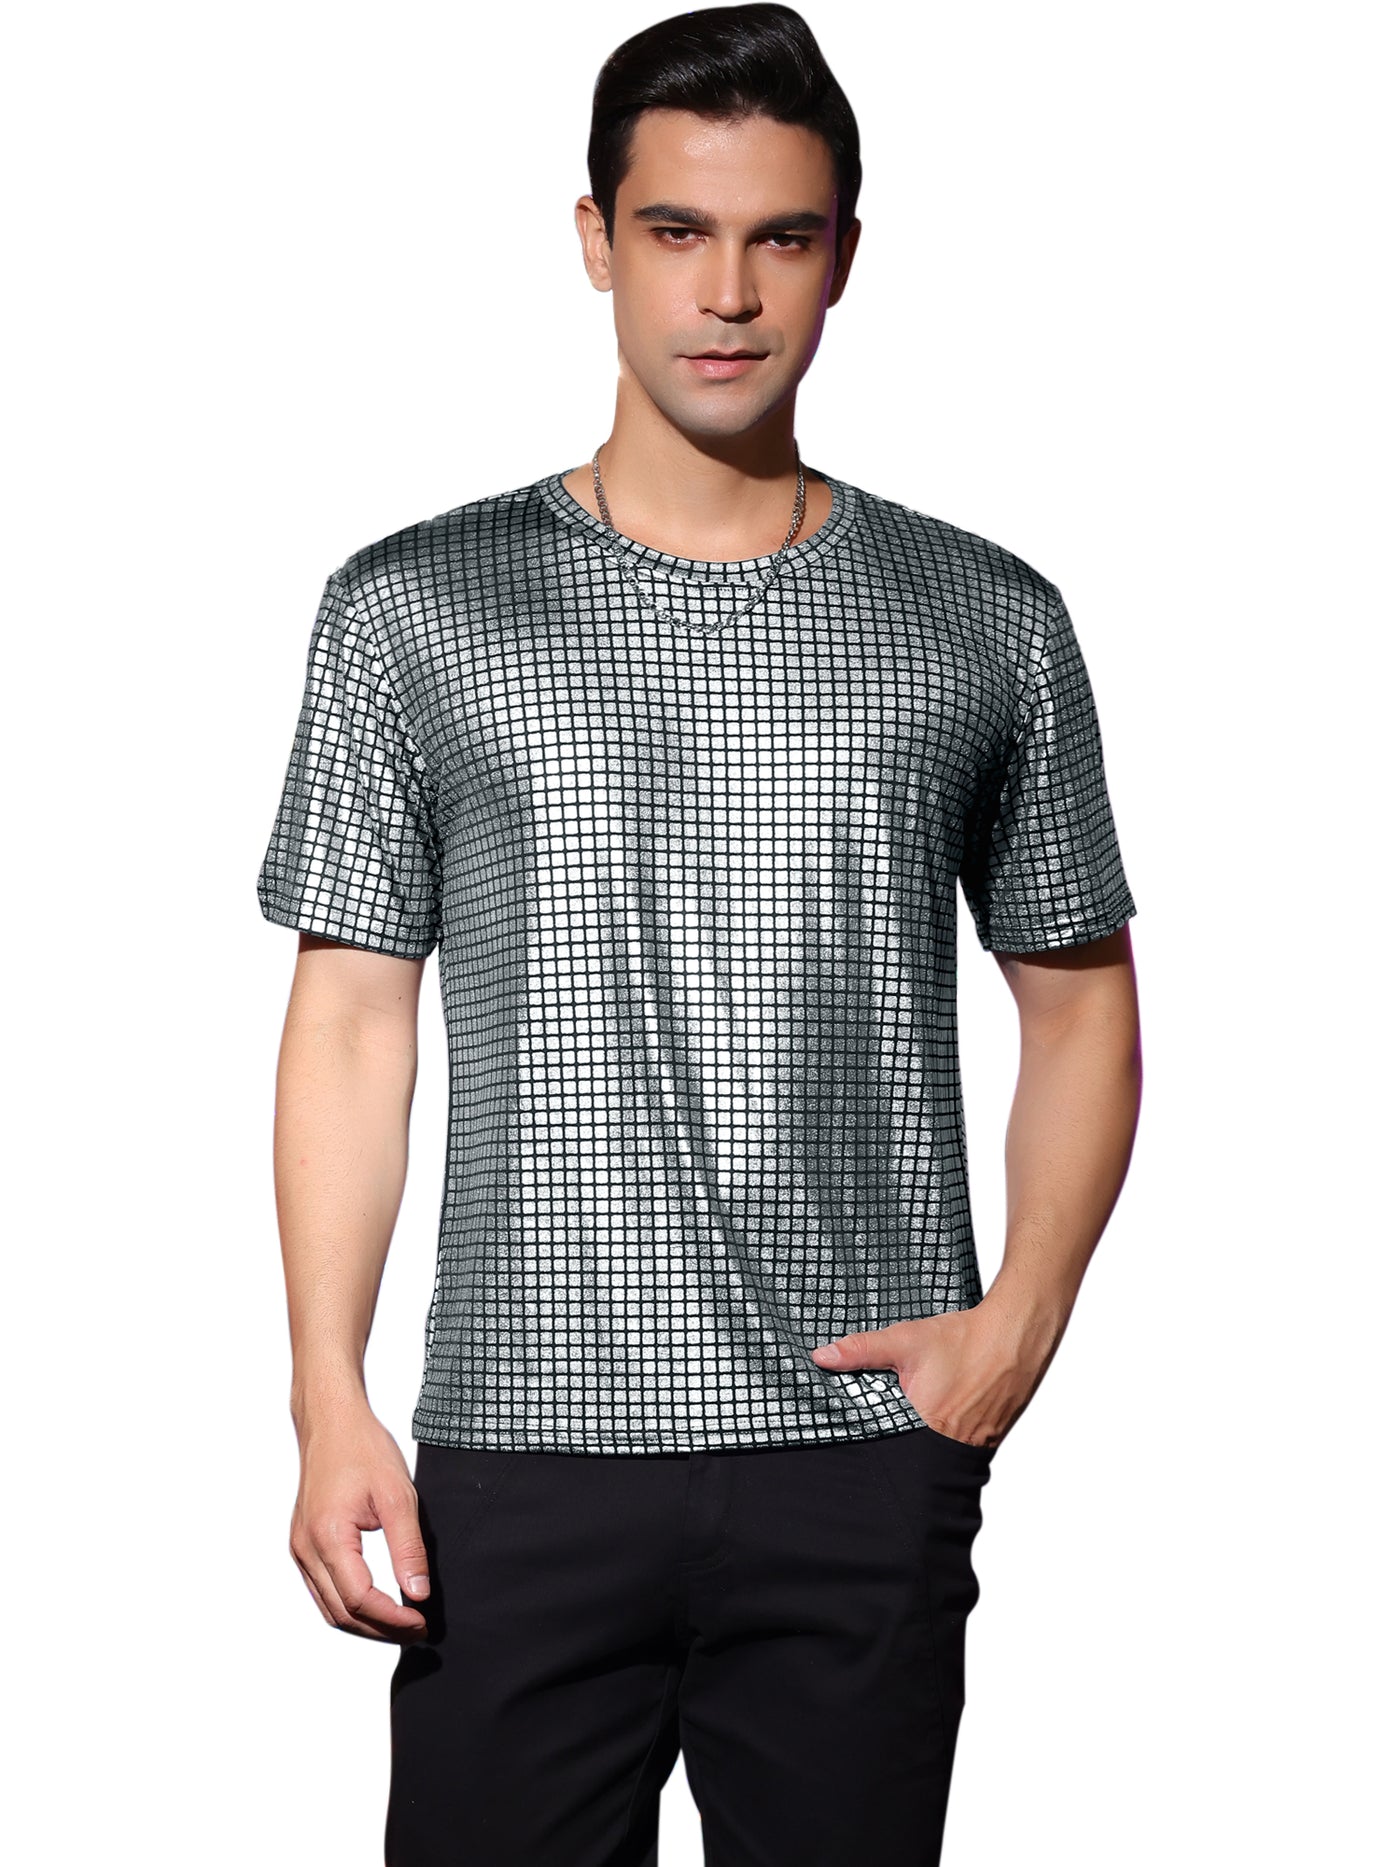 Bublédon Men's Metallic T-Shirt Crew Neck Short Sleeves Shiny Party Nightclub Tee Shirt